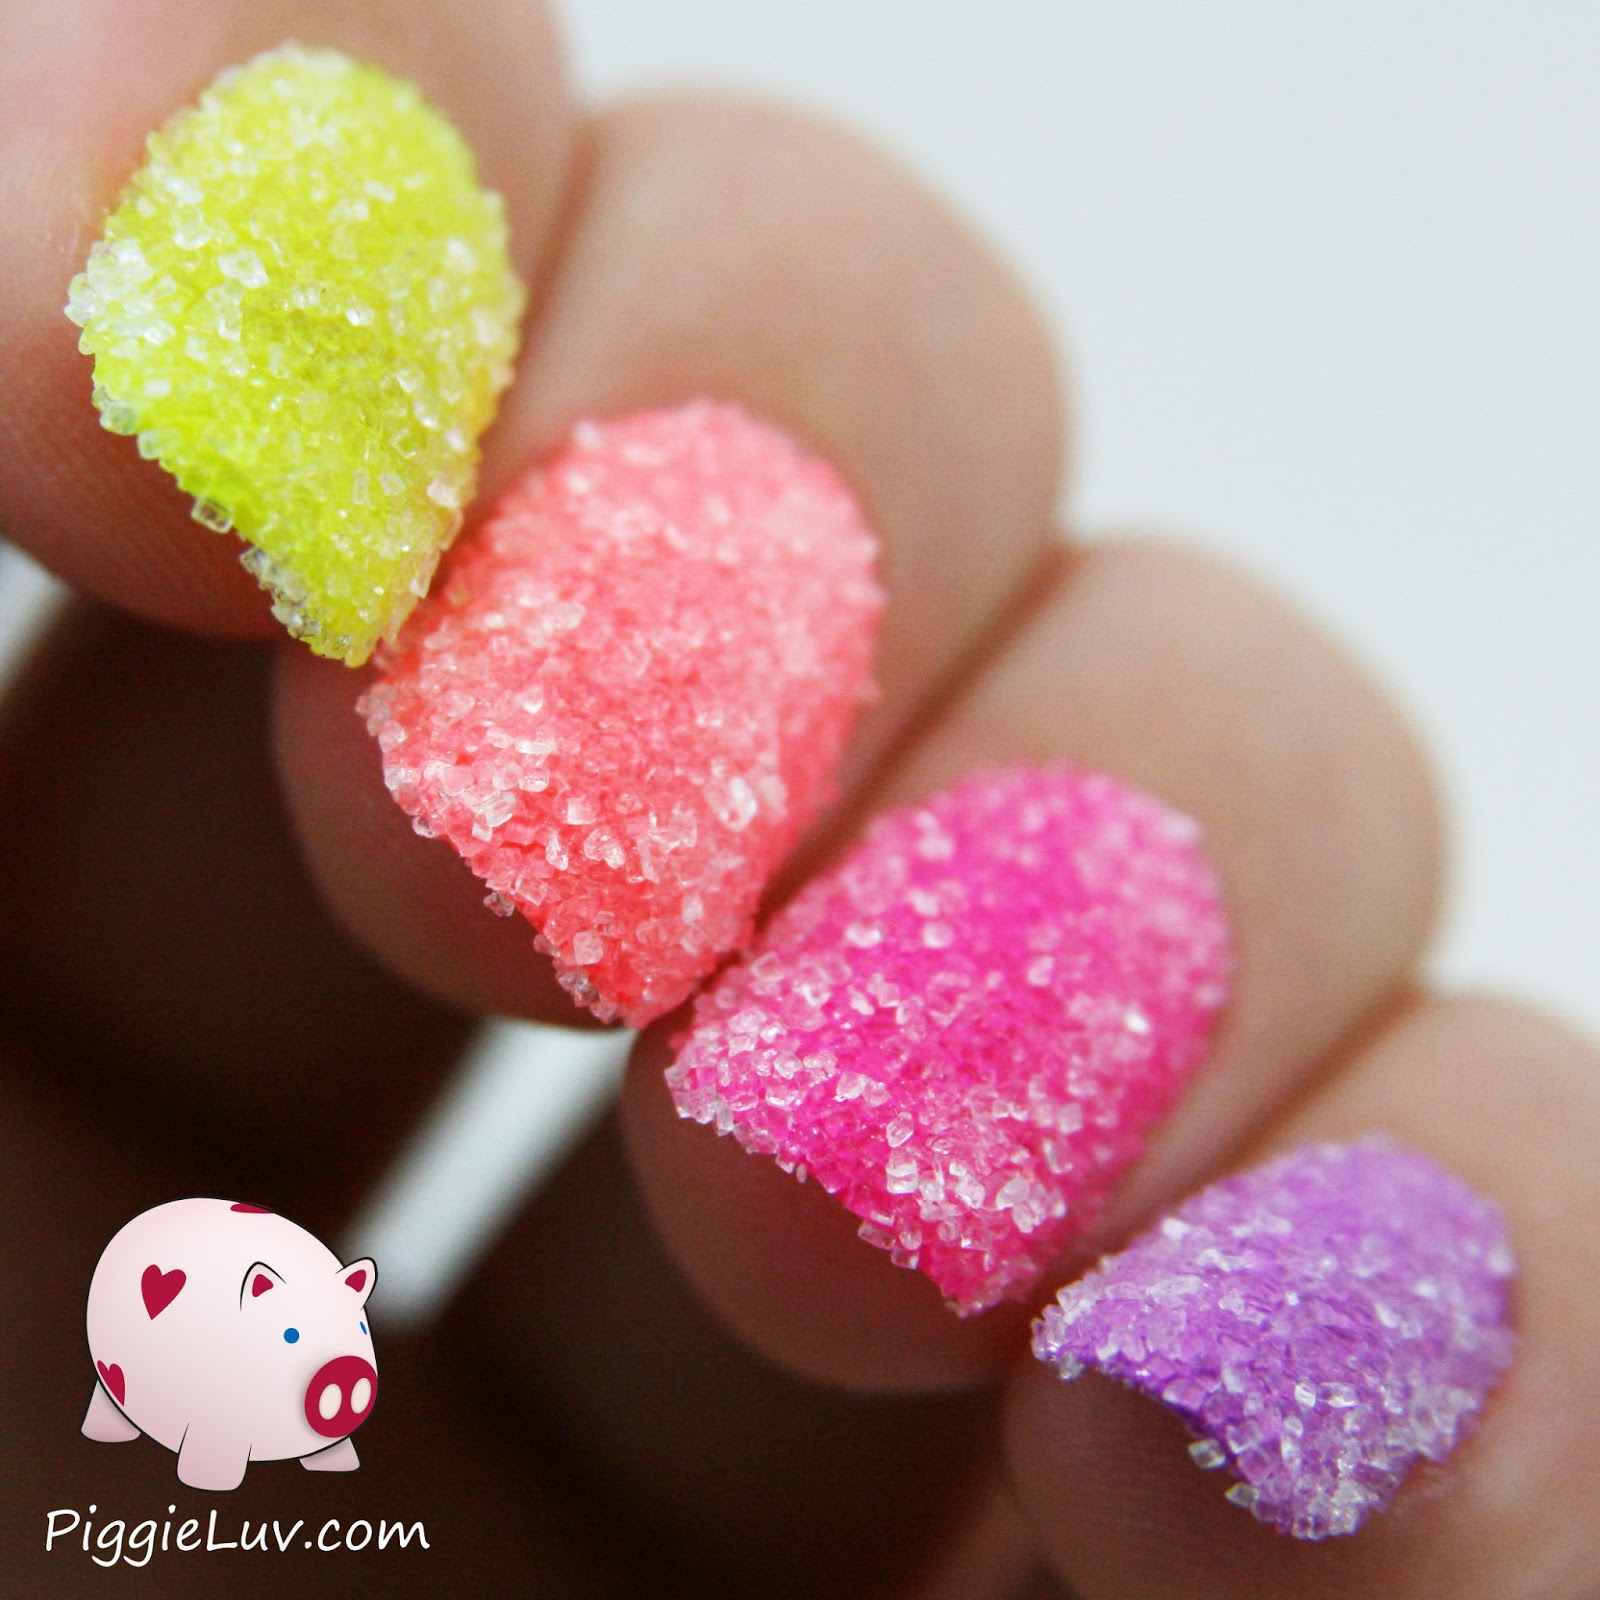 PiggieLuv: Sugar candy nail art